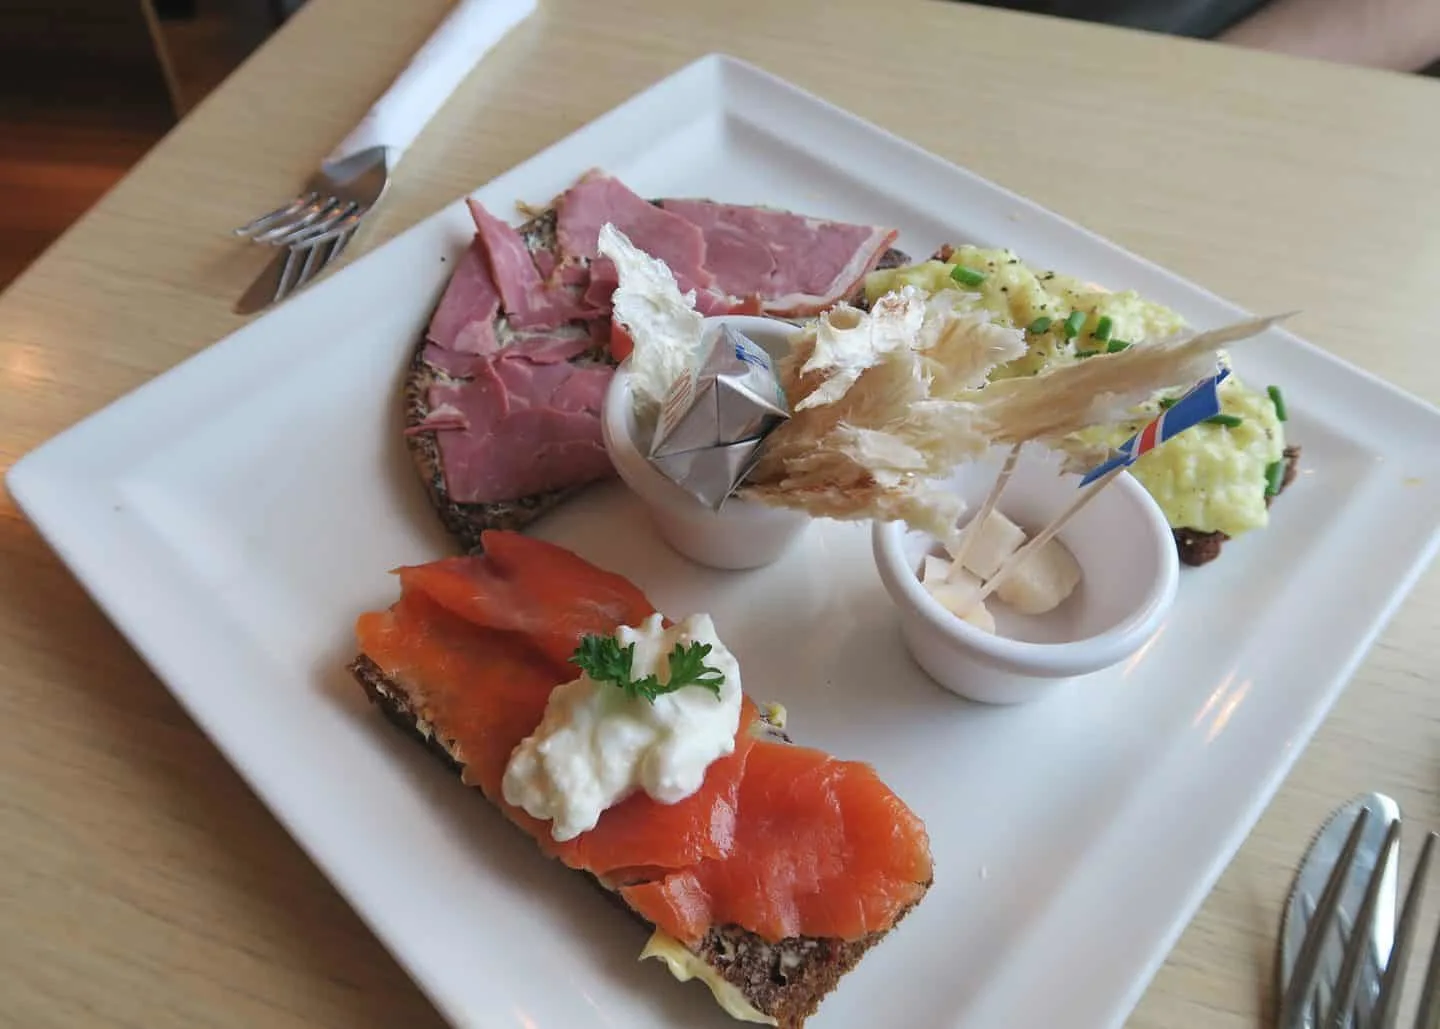 Café Loki is one of the best restaurants to visit in Reykjavik, Iceland